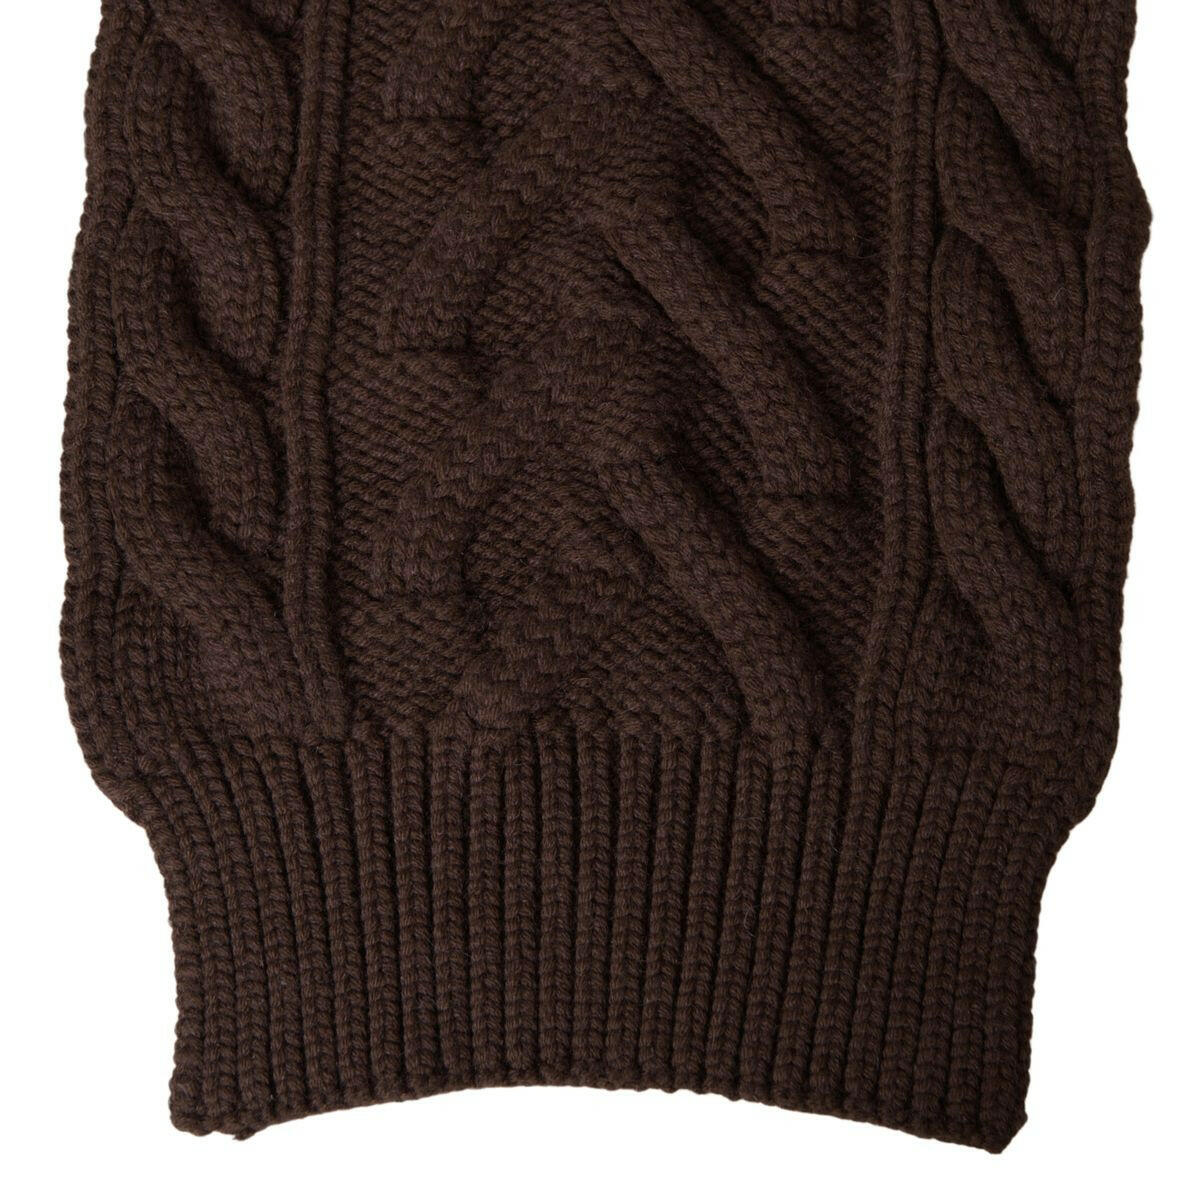 Dolce & Gabbana Brown Cashmere Knit Neck Wrap Shawl Scarf - GENUINE AUTHENTIC BRAND LLC  